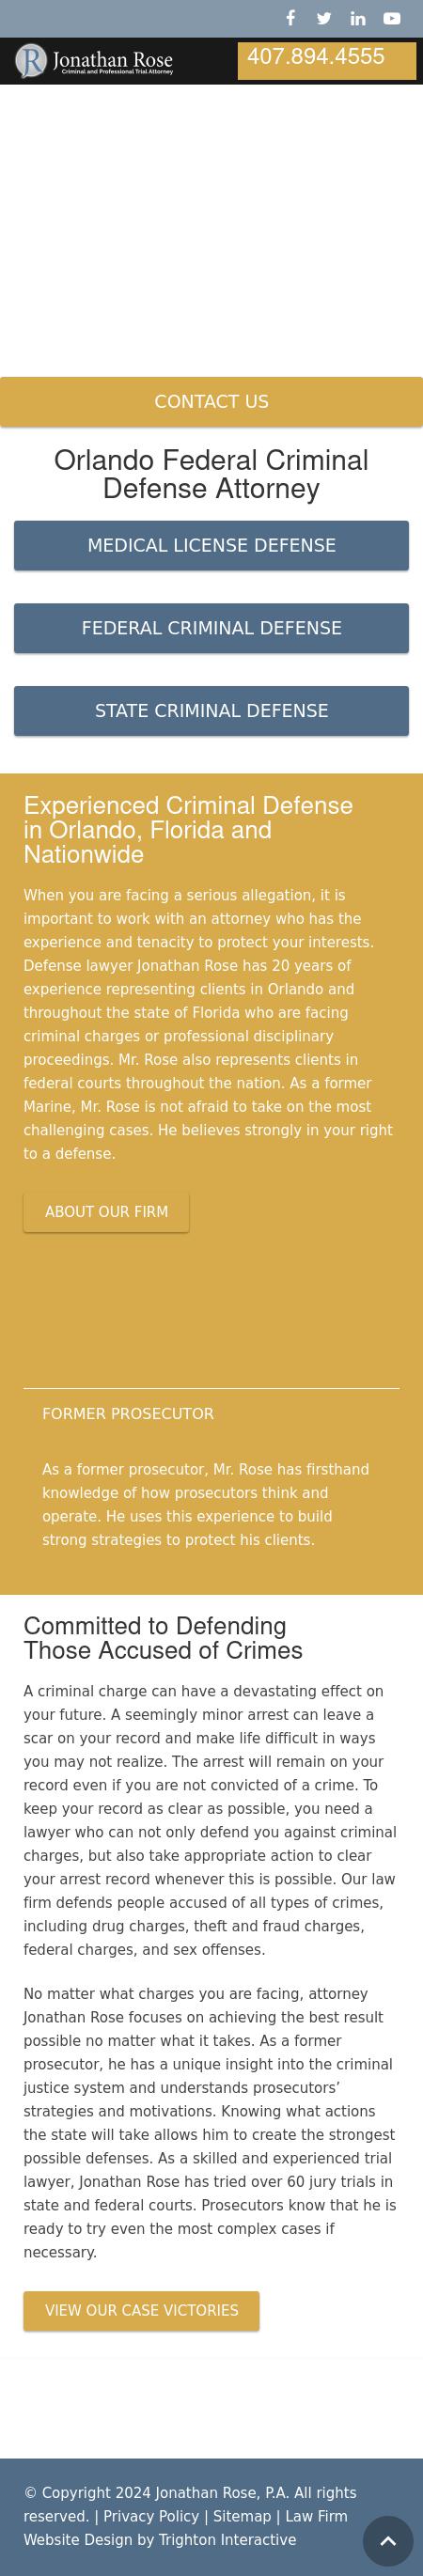 Jonathan Rose, Attorney at Law - Orlando FL Lawyers